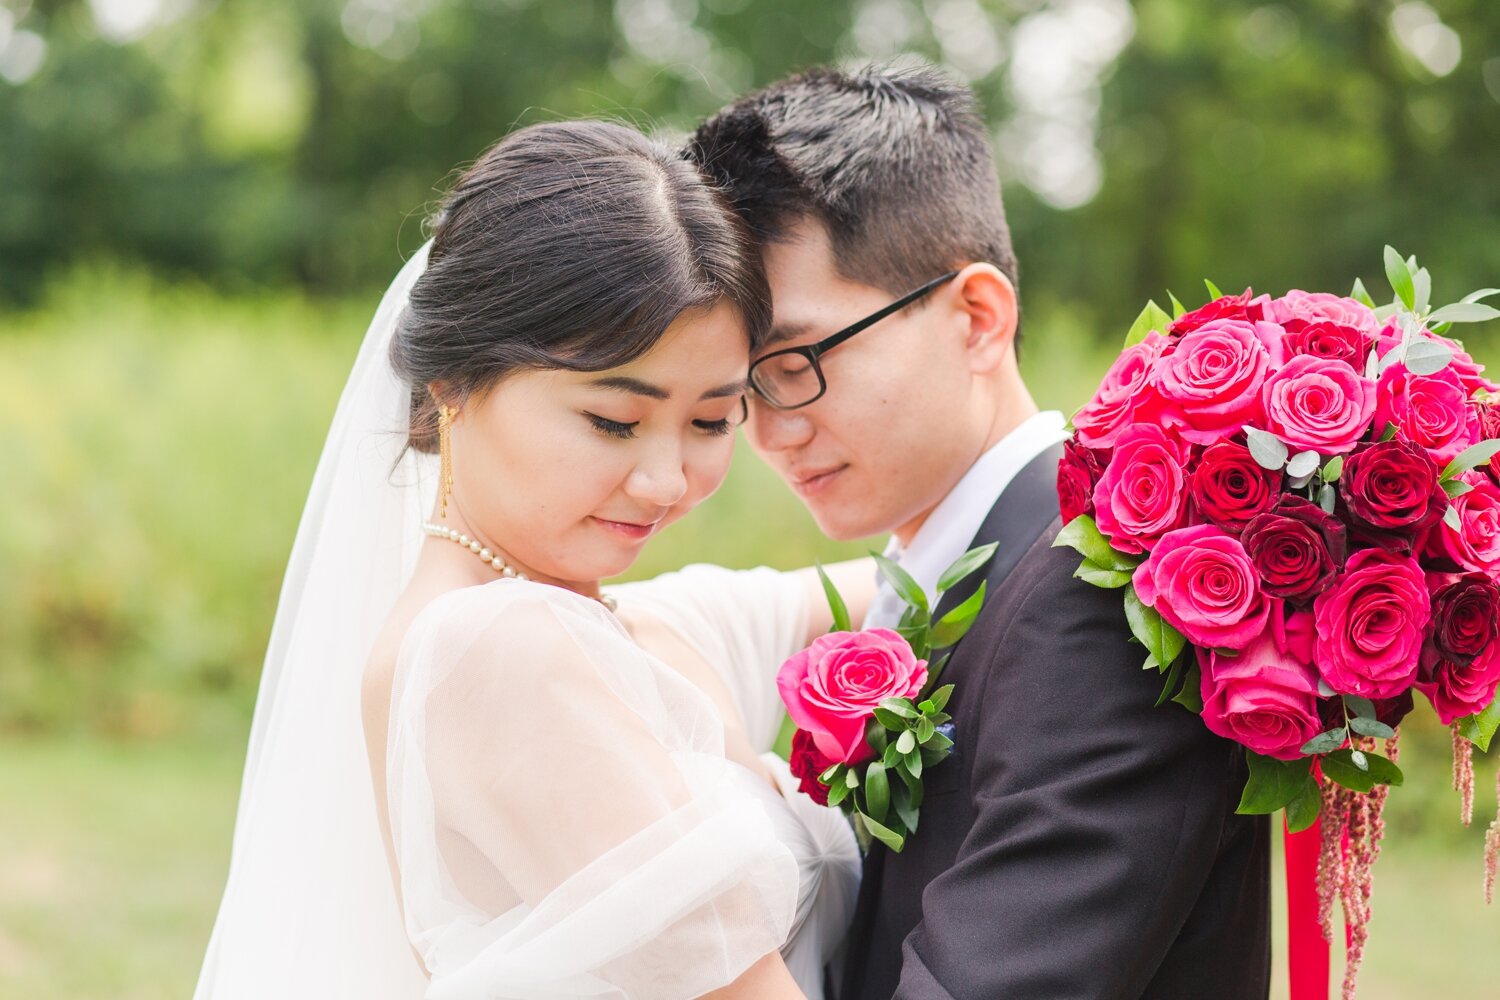 winvian-farm-wedding-elopement-morris-connecticut-photographer-shaina-lee-photography-photo